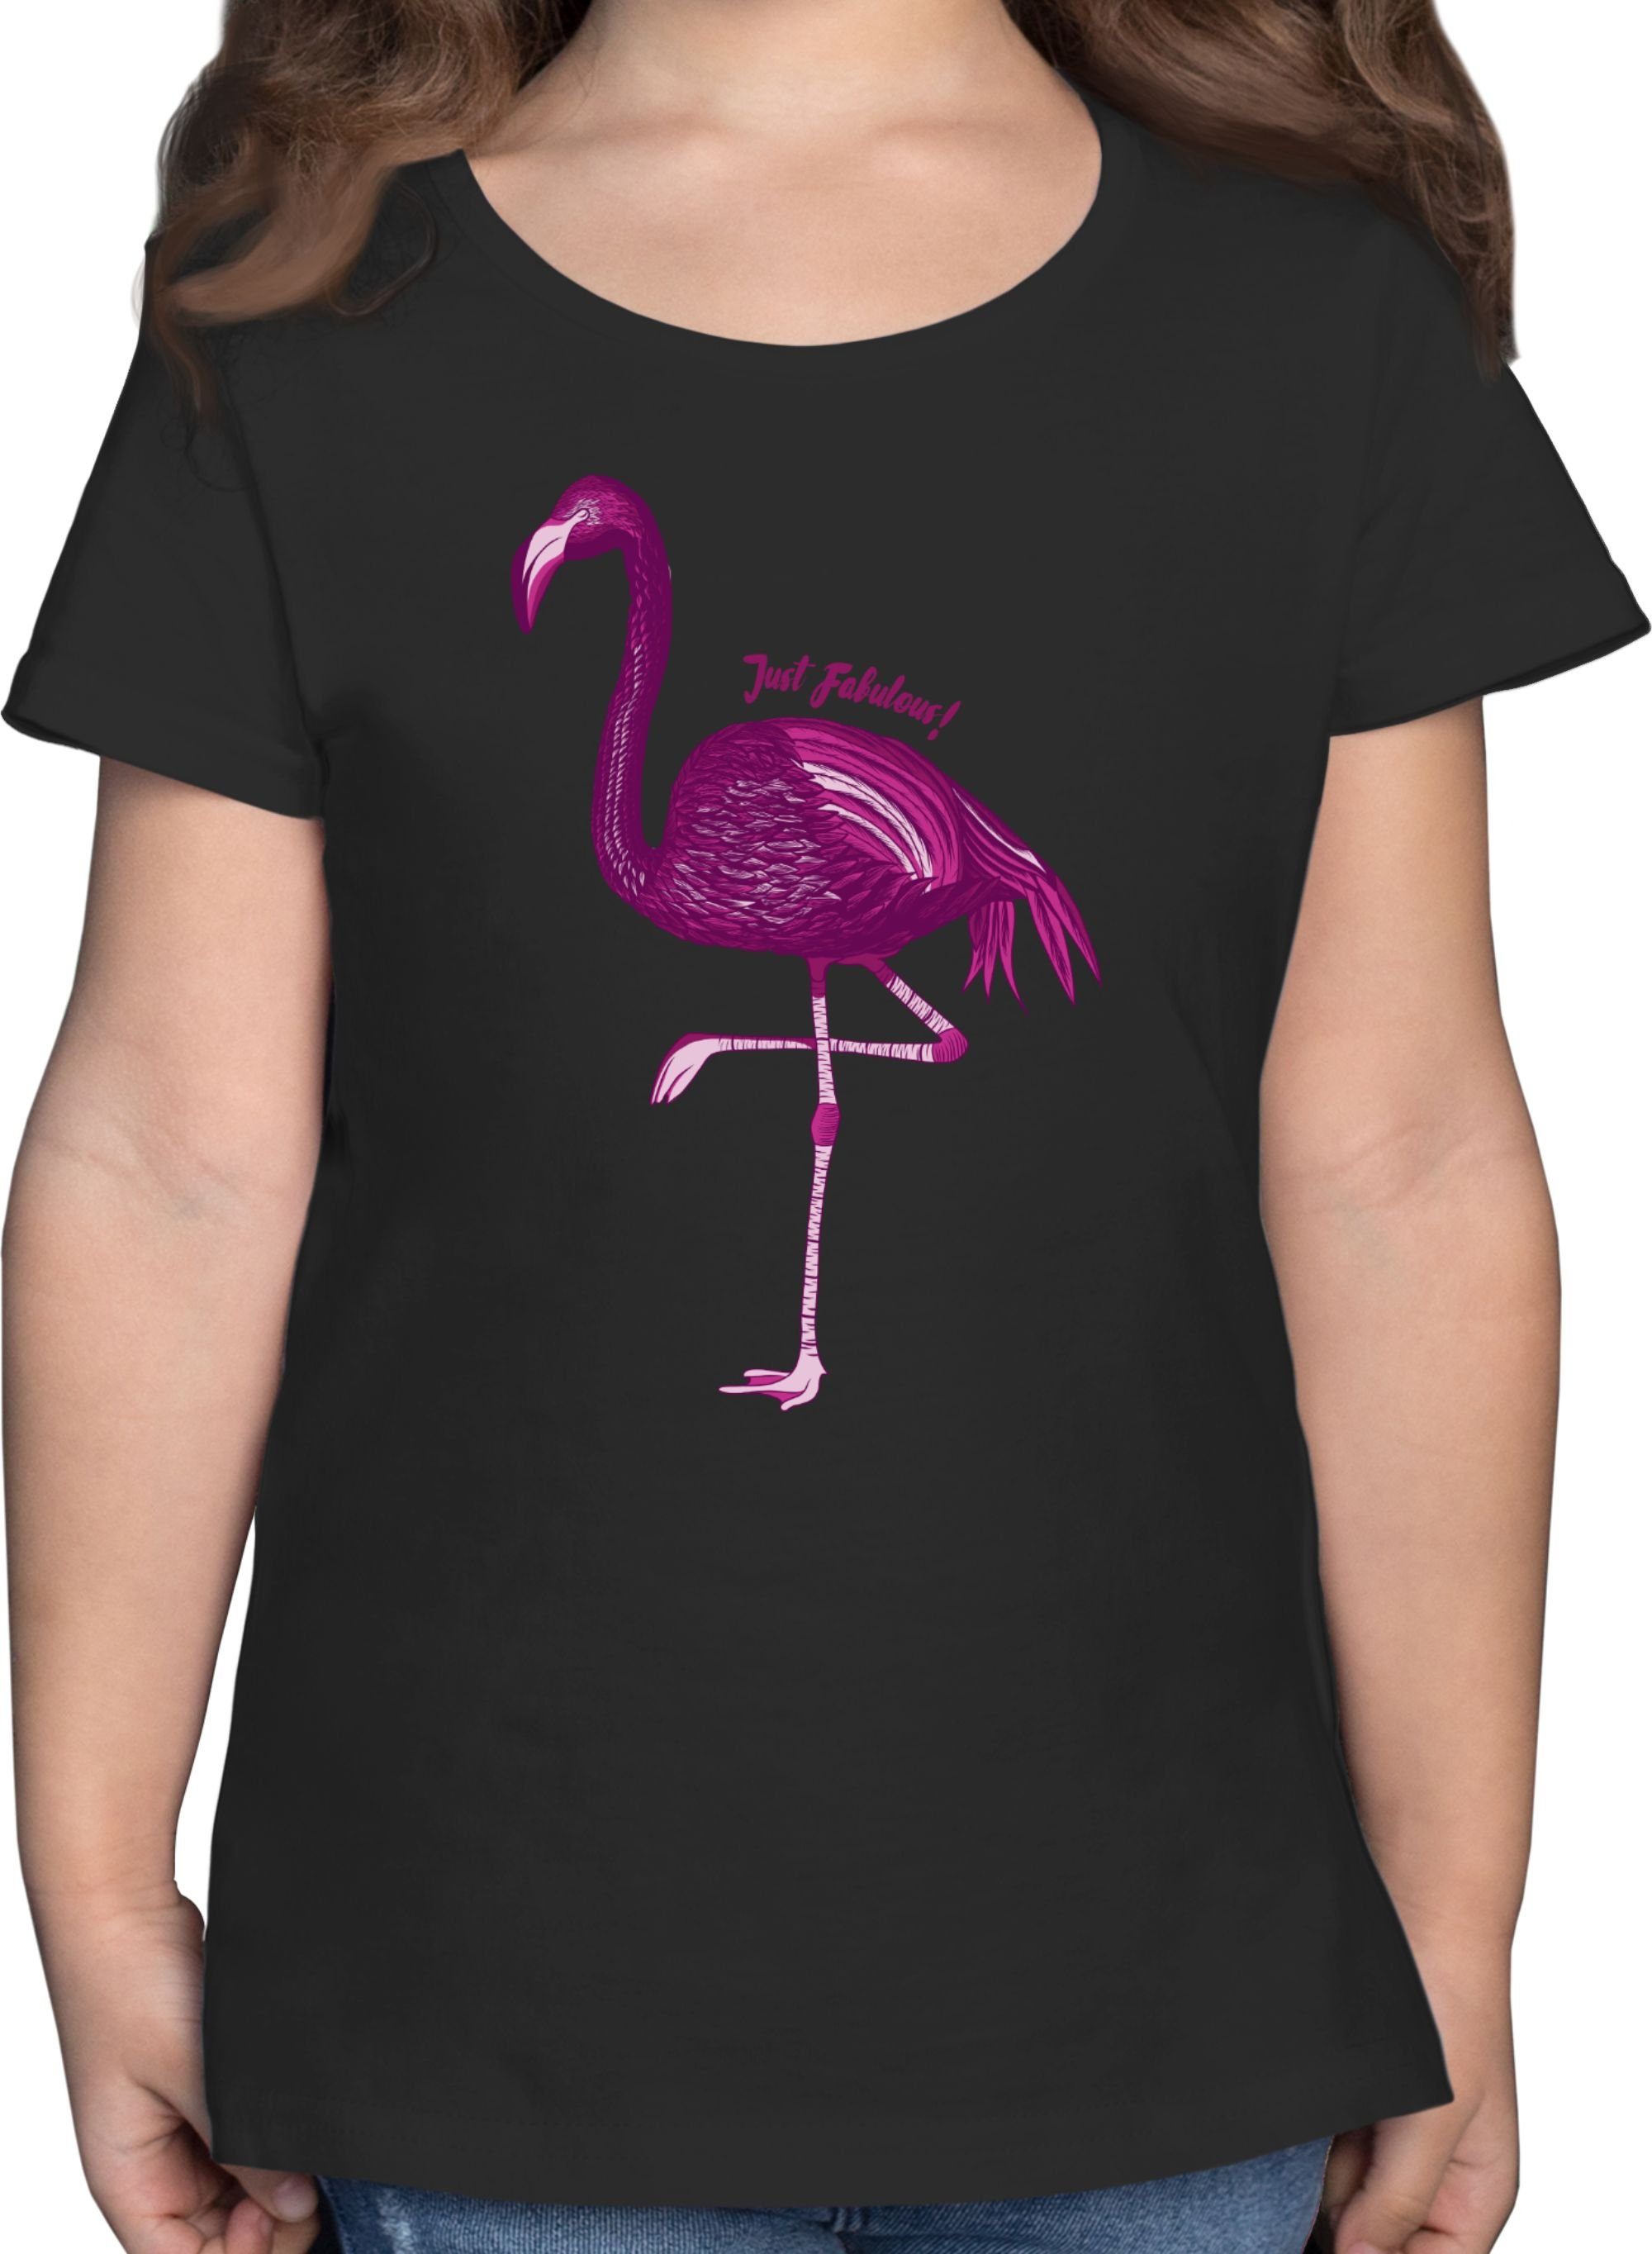 Shirtracer T-Shirt Flamingo - Just Fabulous 3 Tiermotiv Print Animal Schwarz